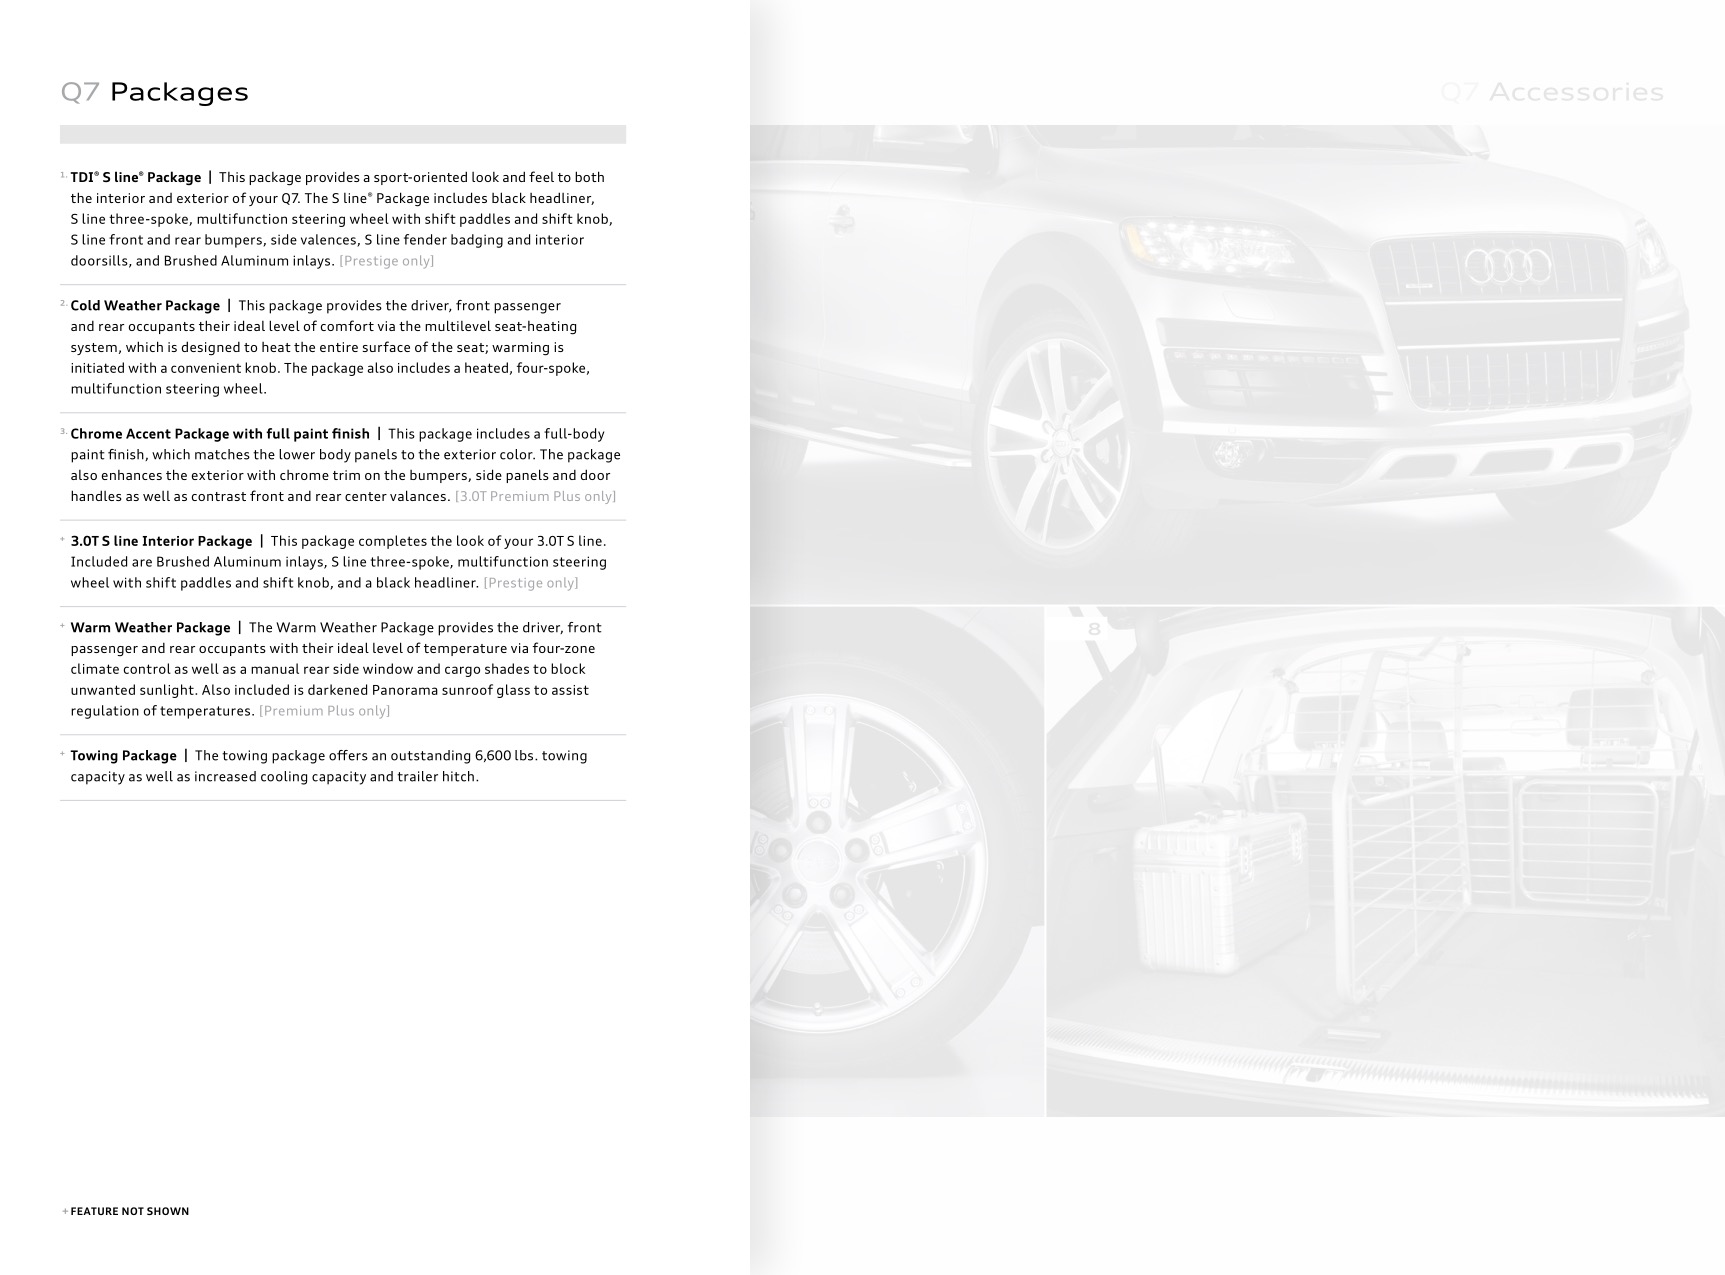 2011 Audi Q7 Brochure Page 33